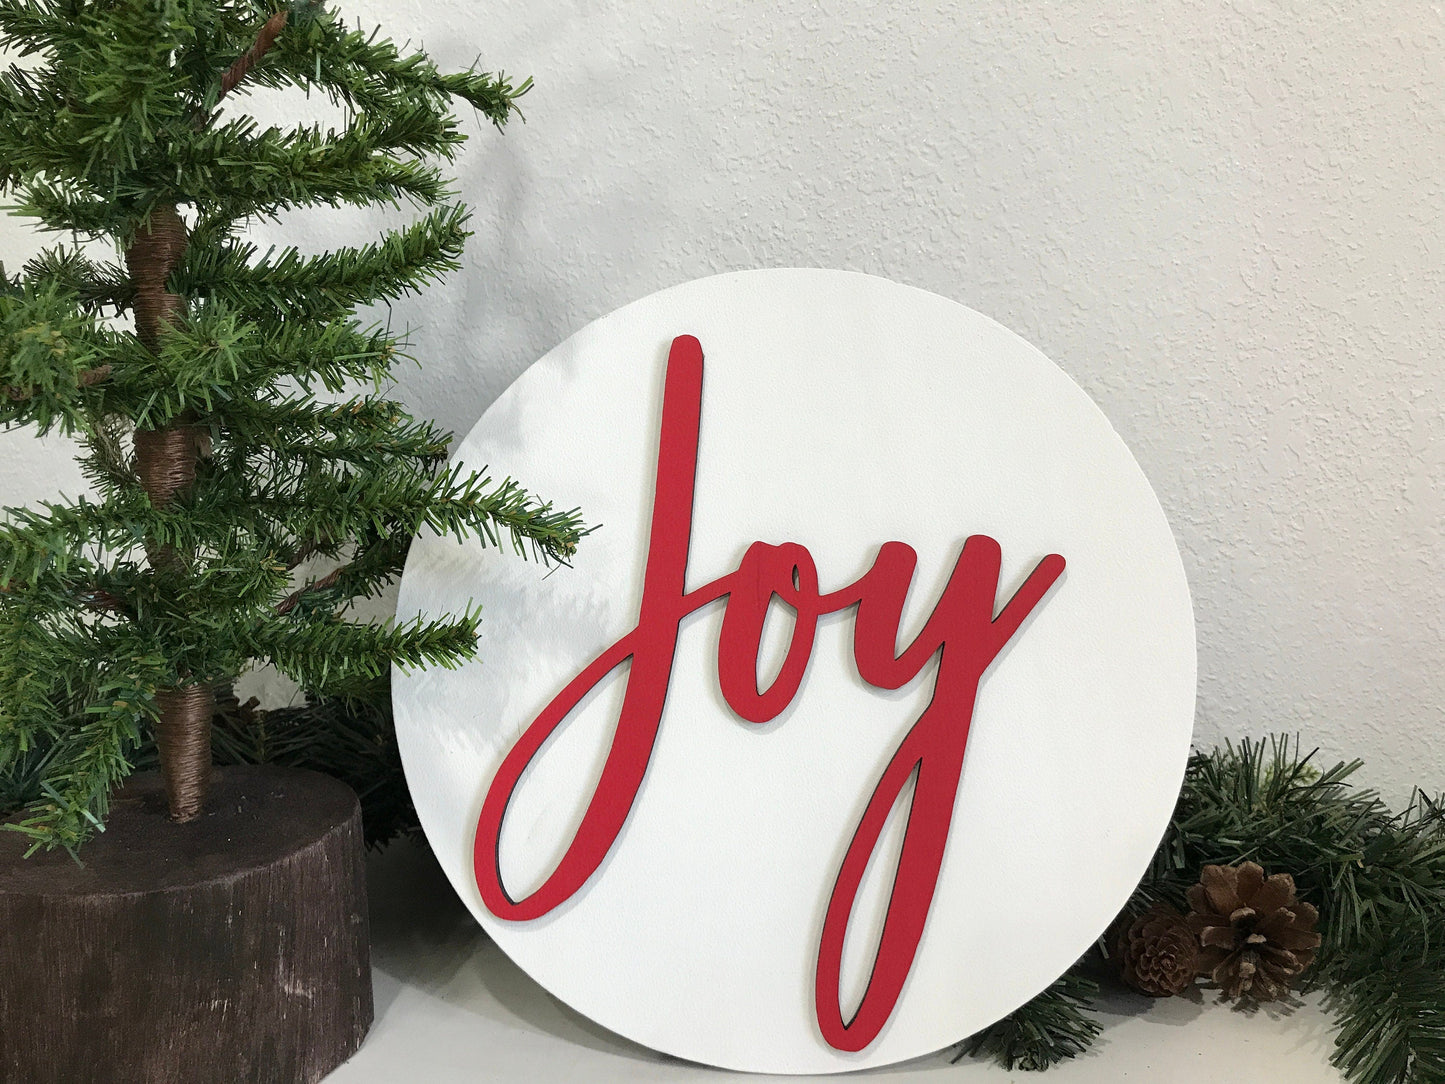 joy sign - holiday sign